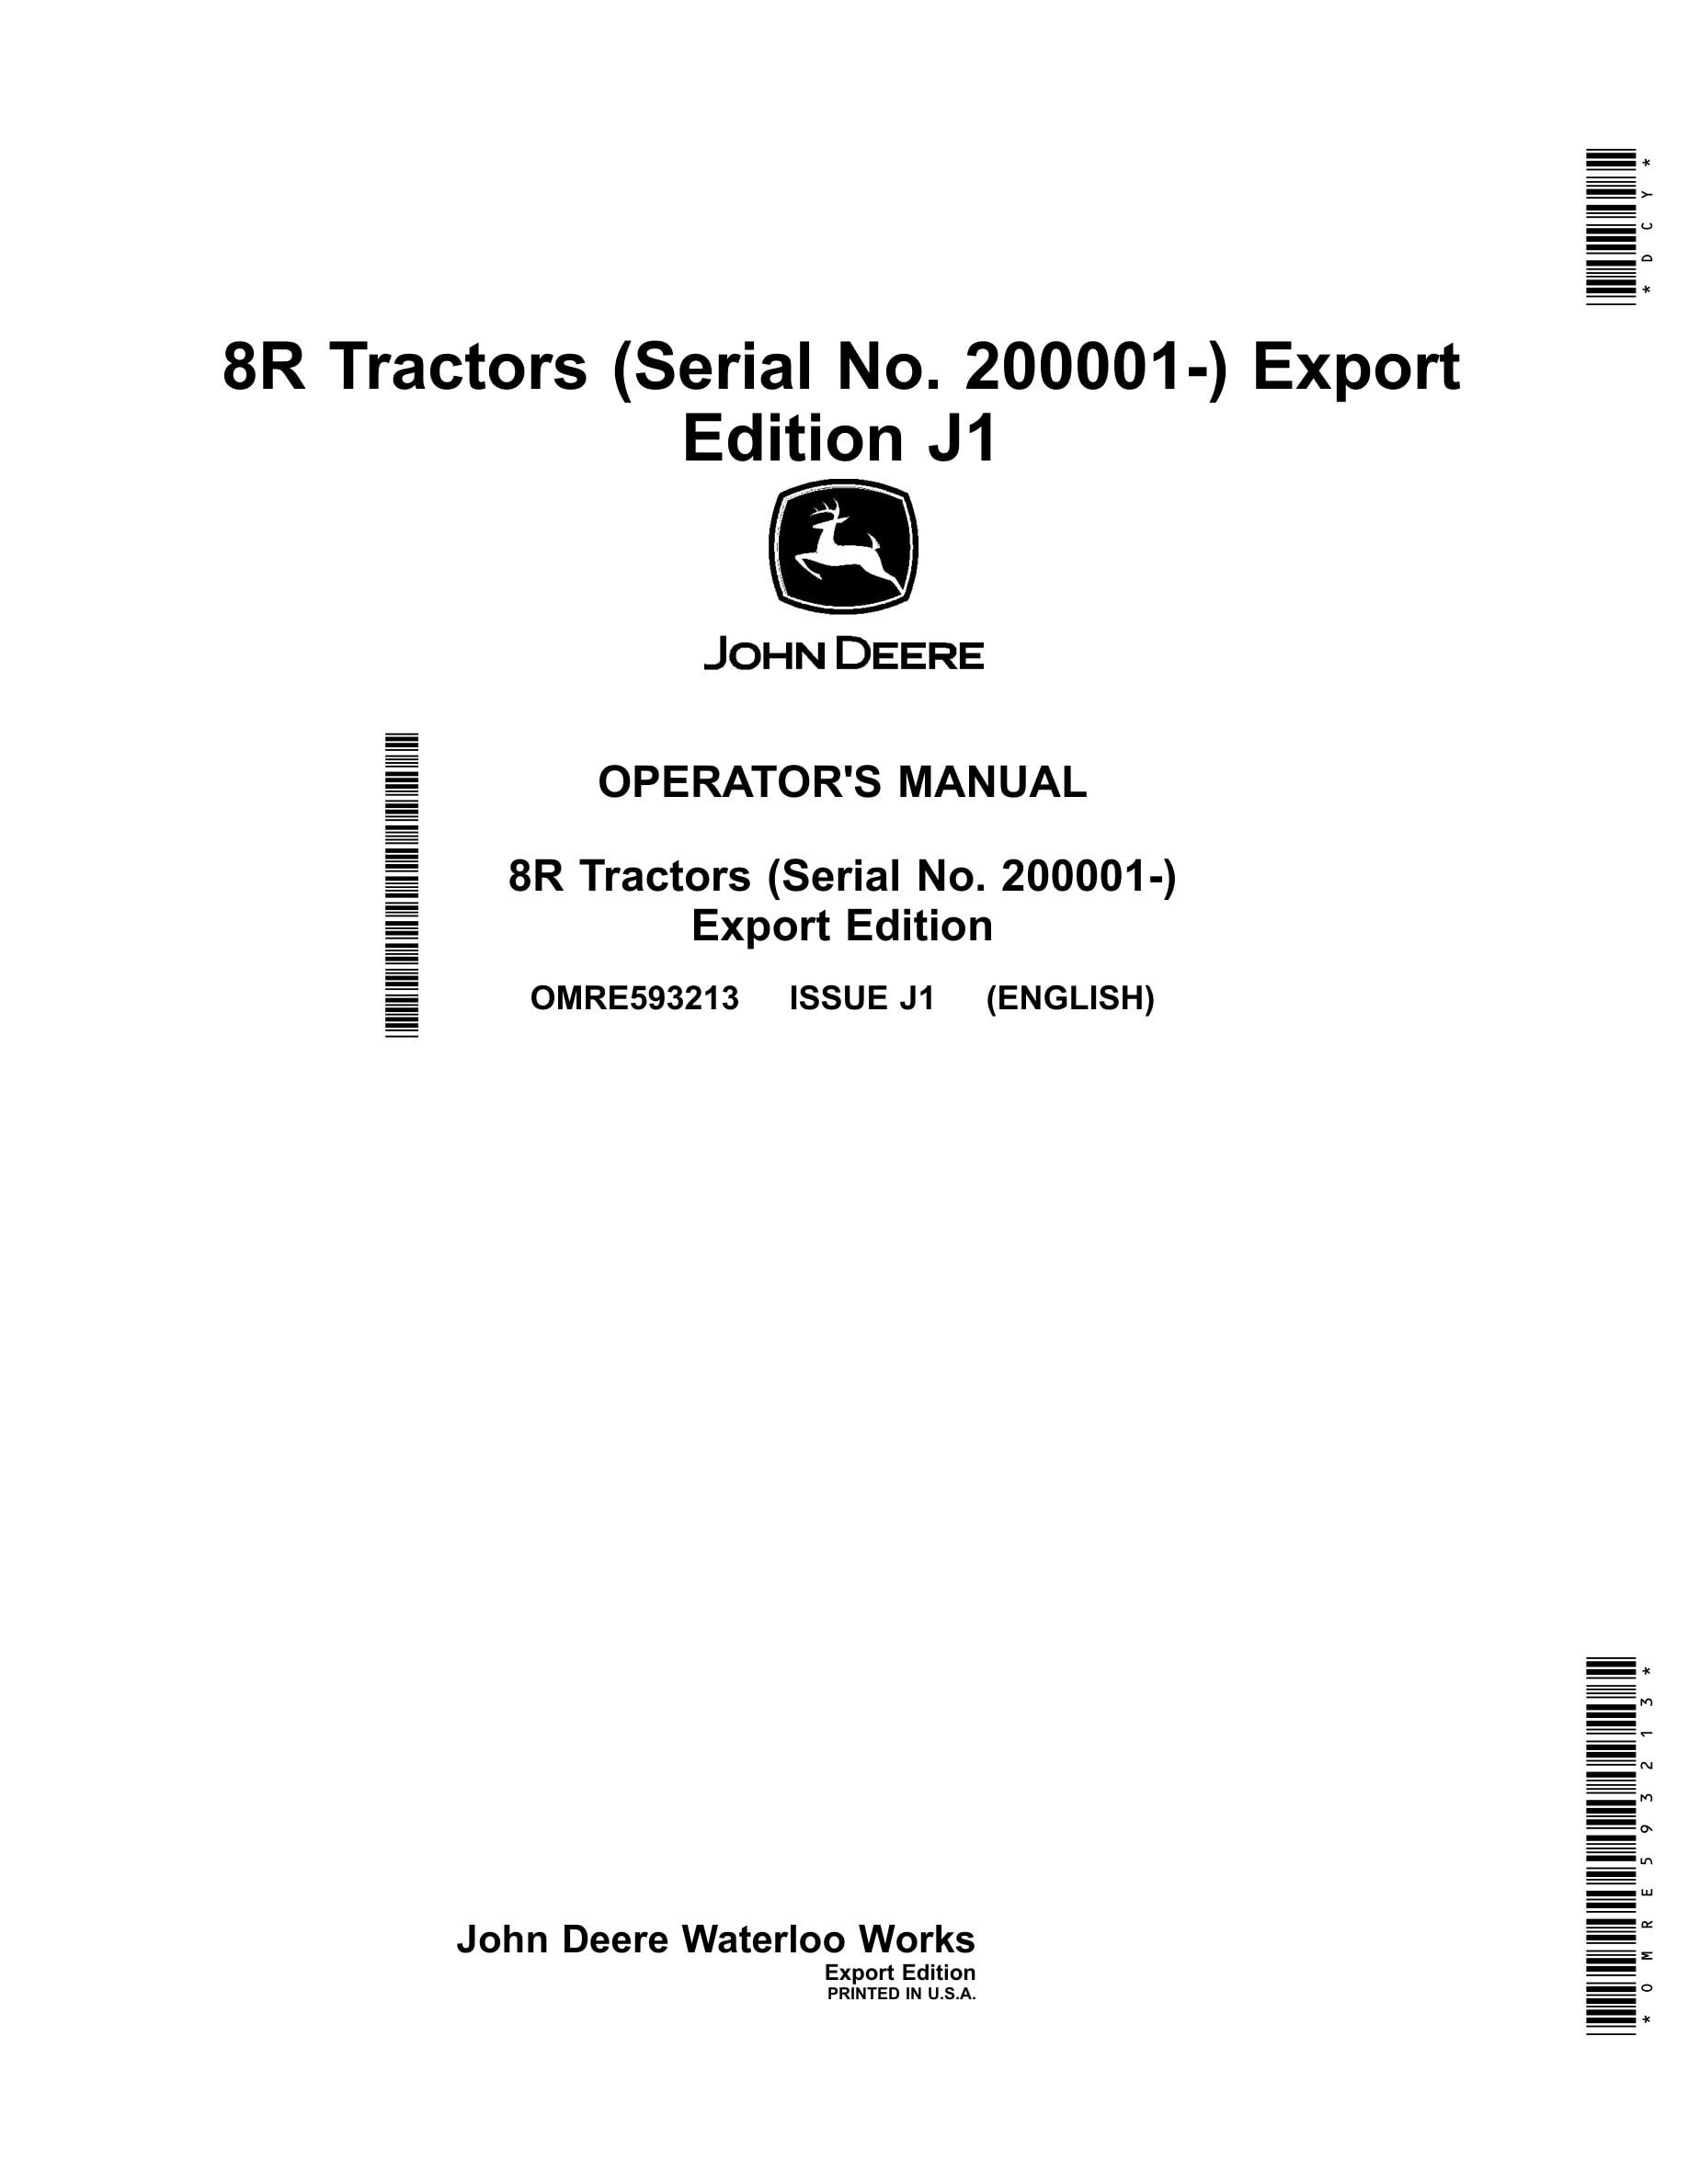 John Deere 8r Tractors Operator Manuals OMRE593213-1